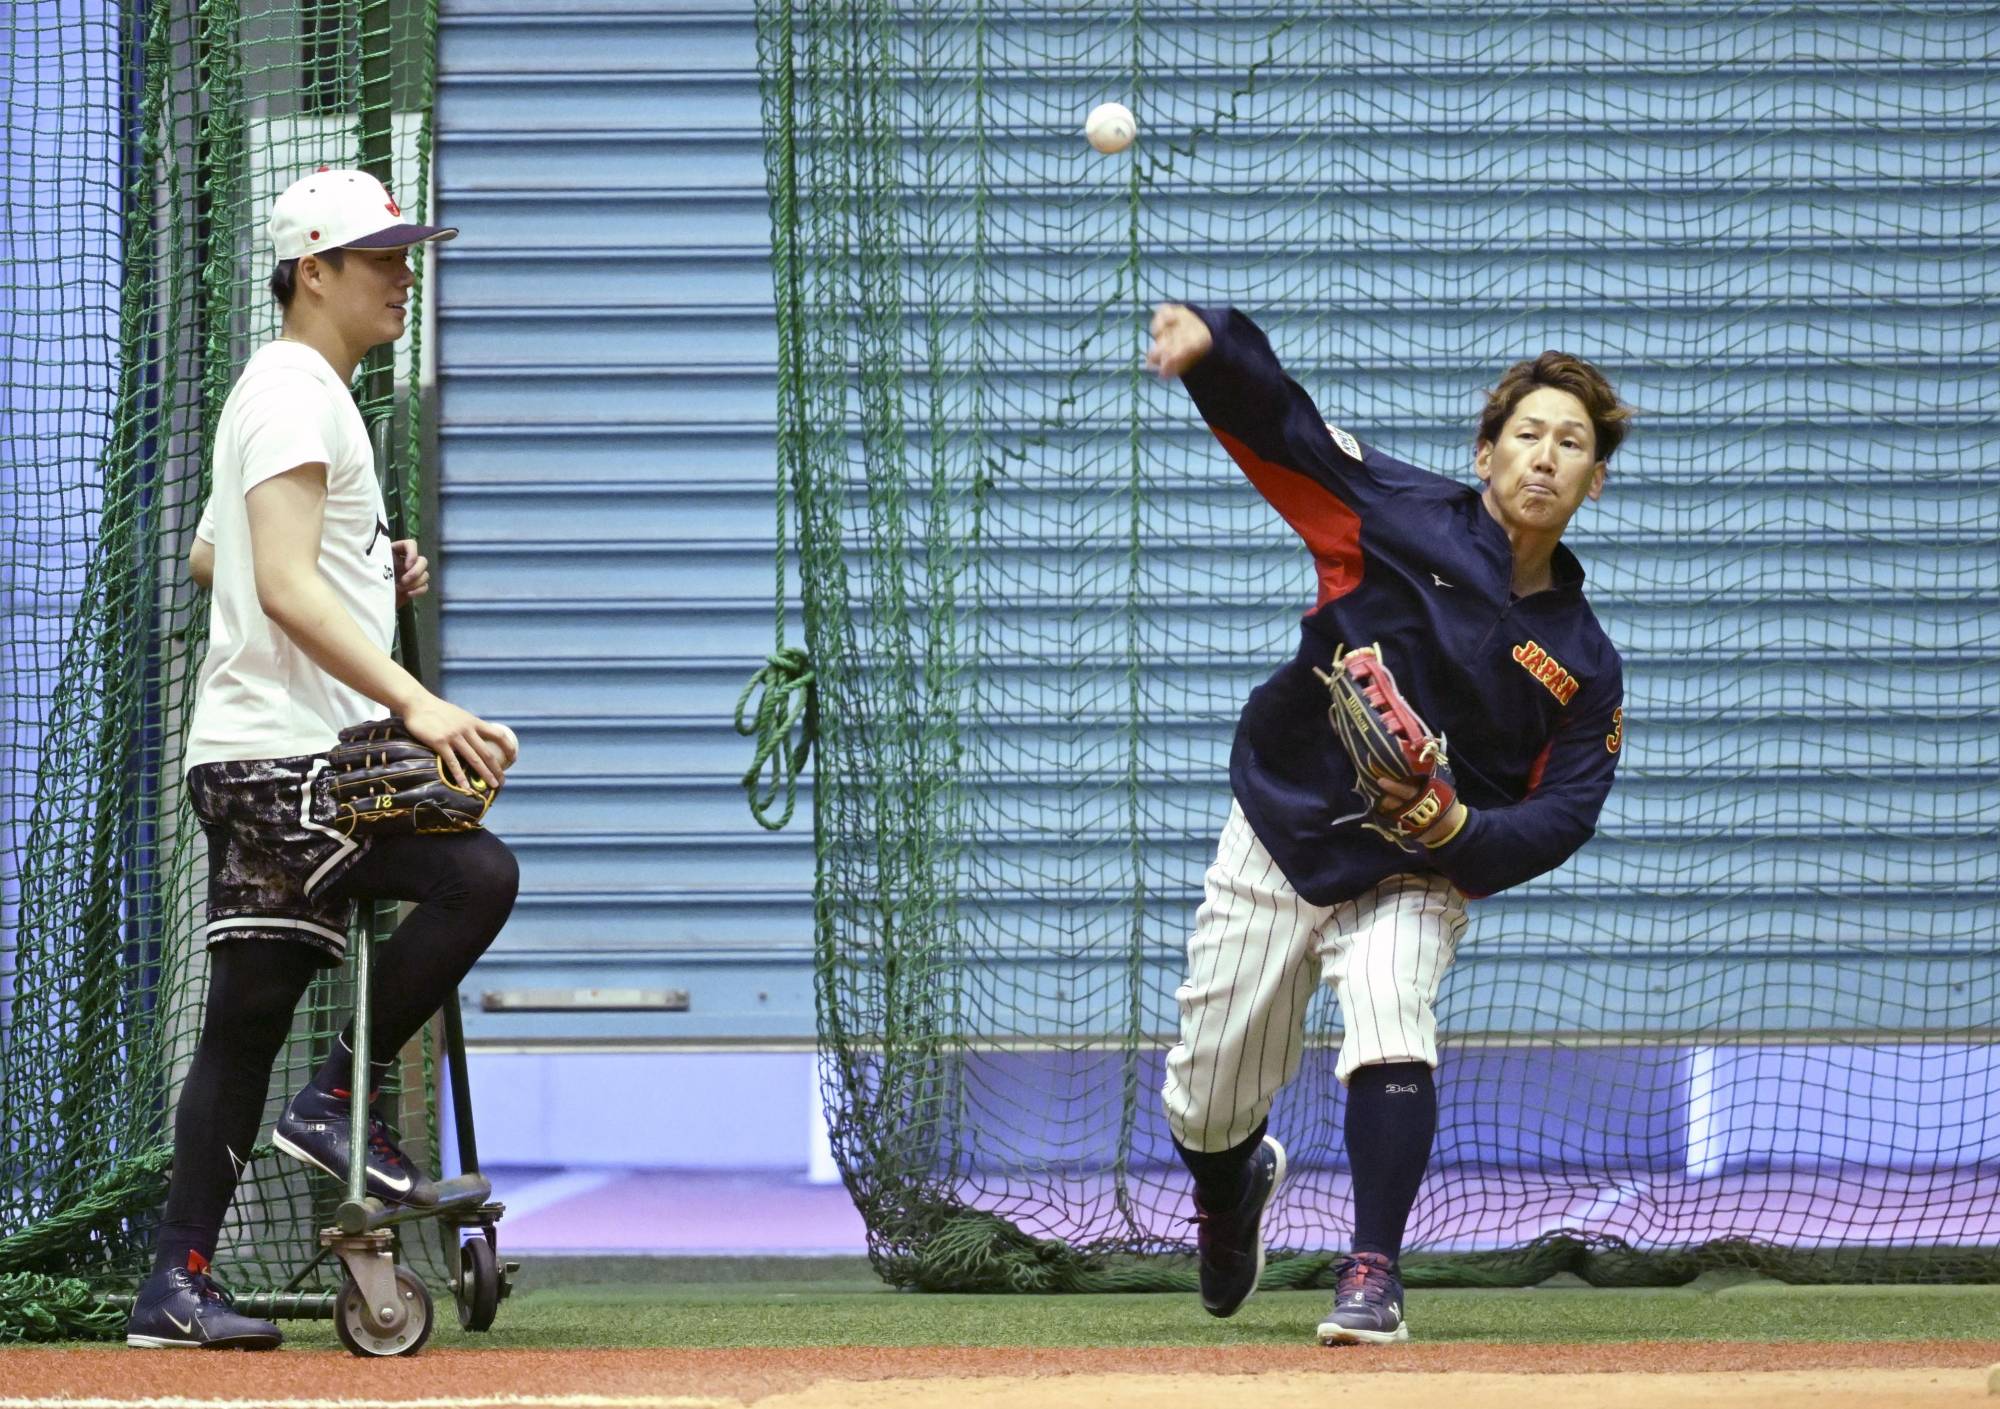 Red Sox outfielder Masataka Yoshida arrives to complete Samurai